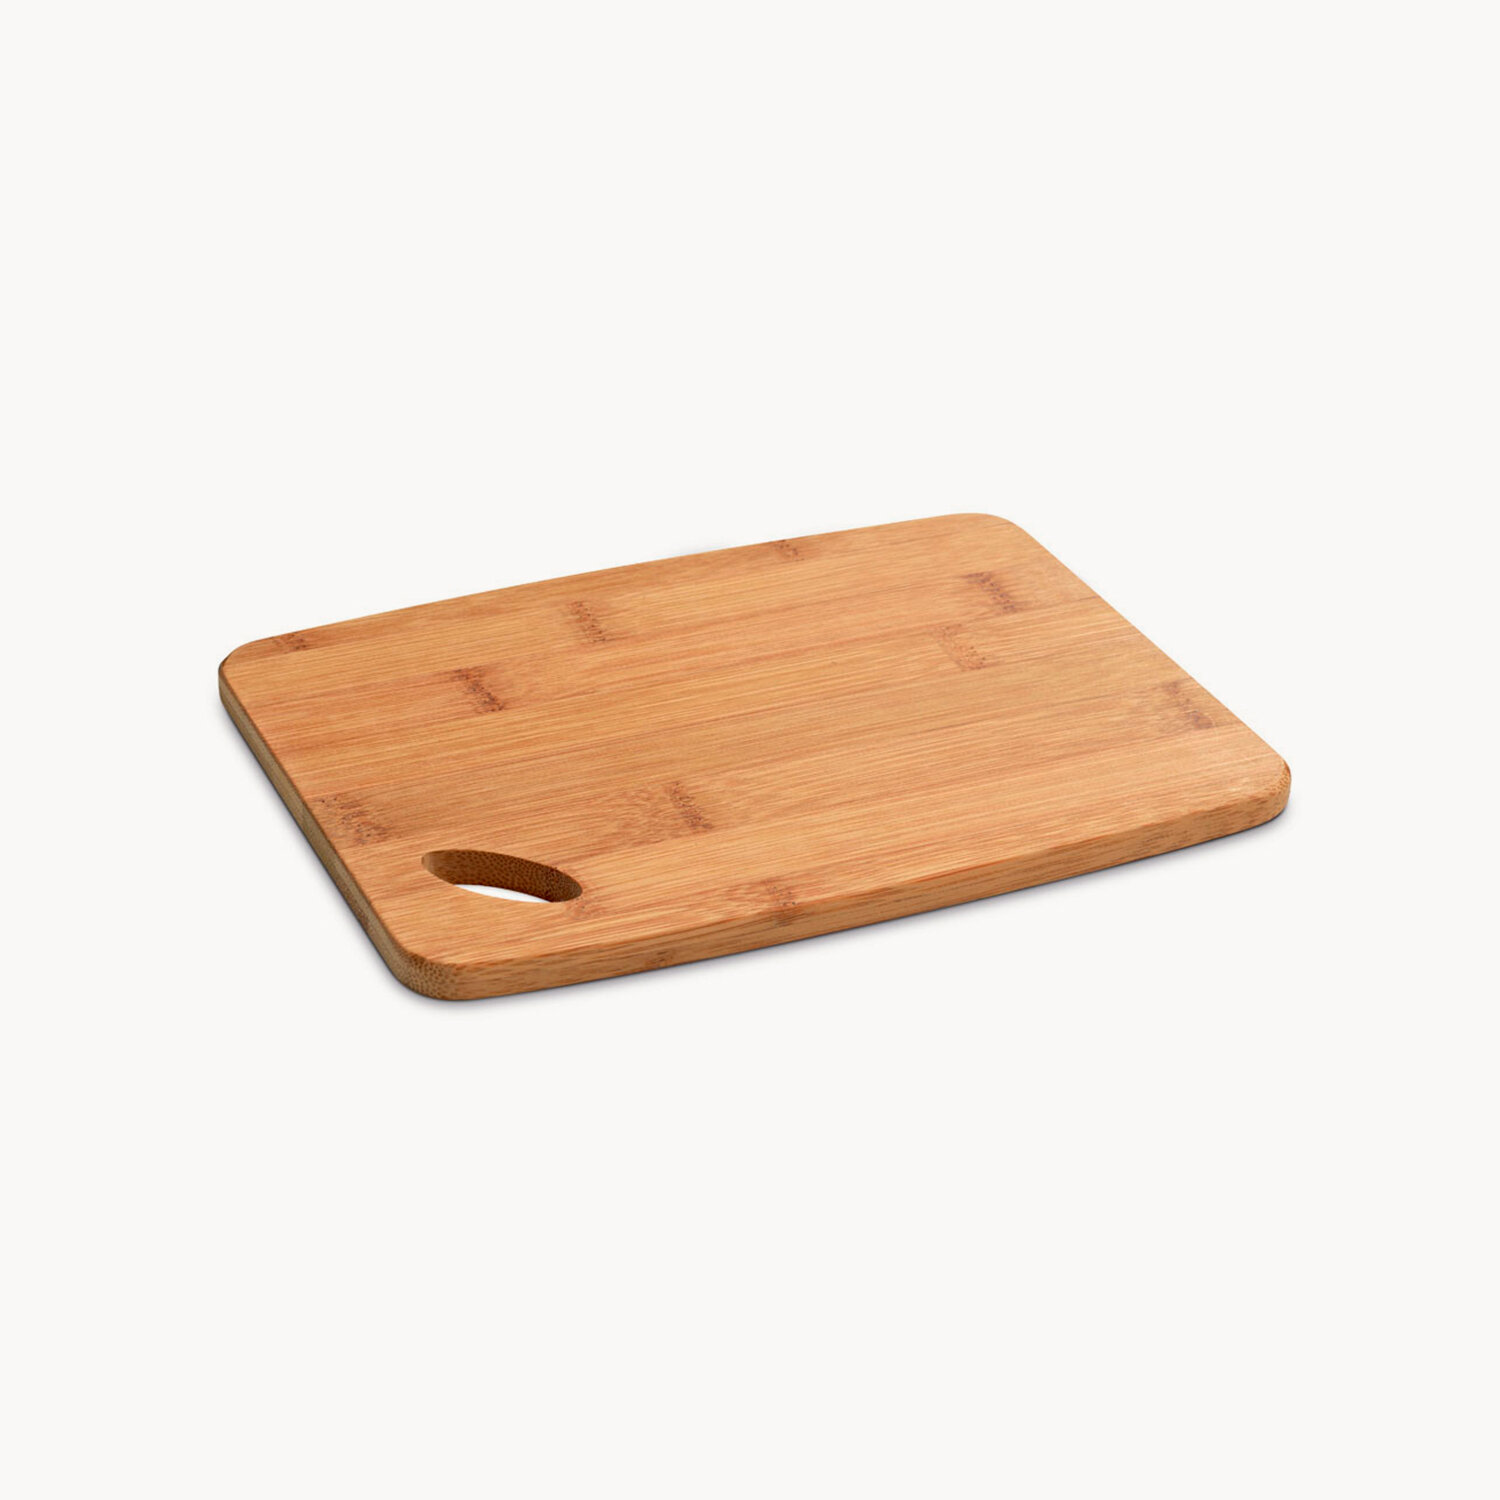 Tabla de madera de bambú para cocinar 